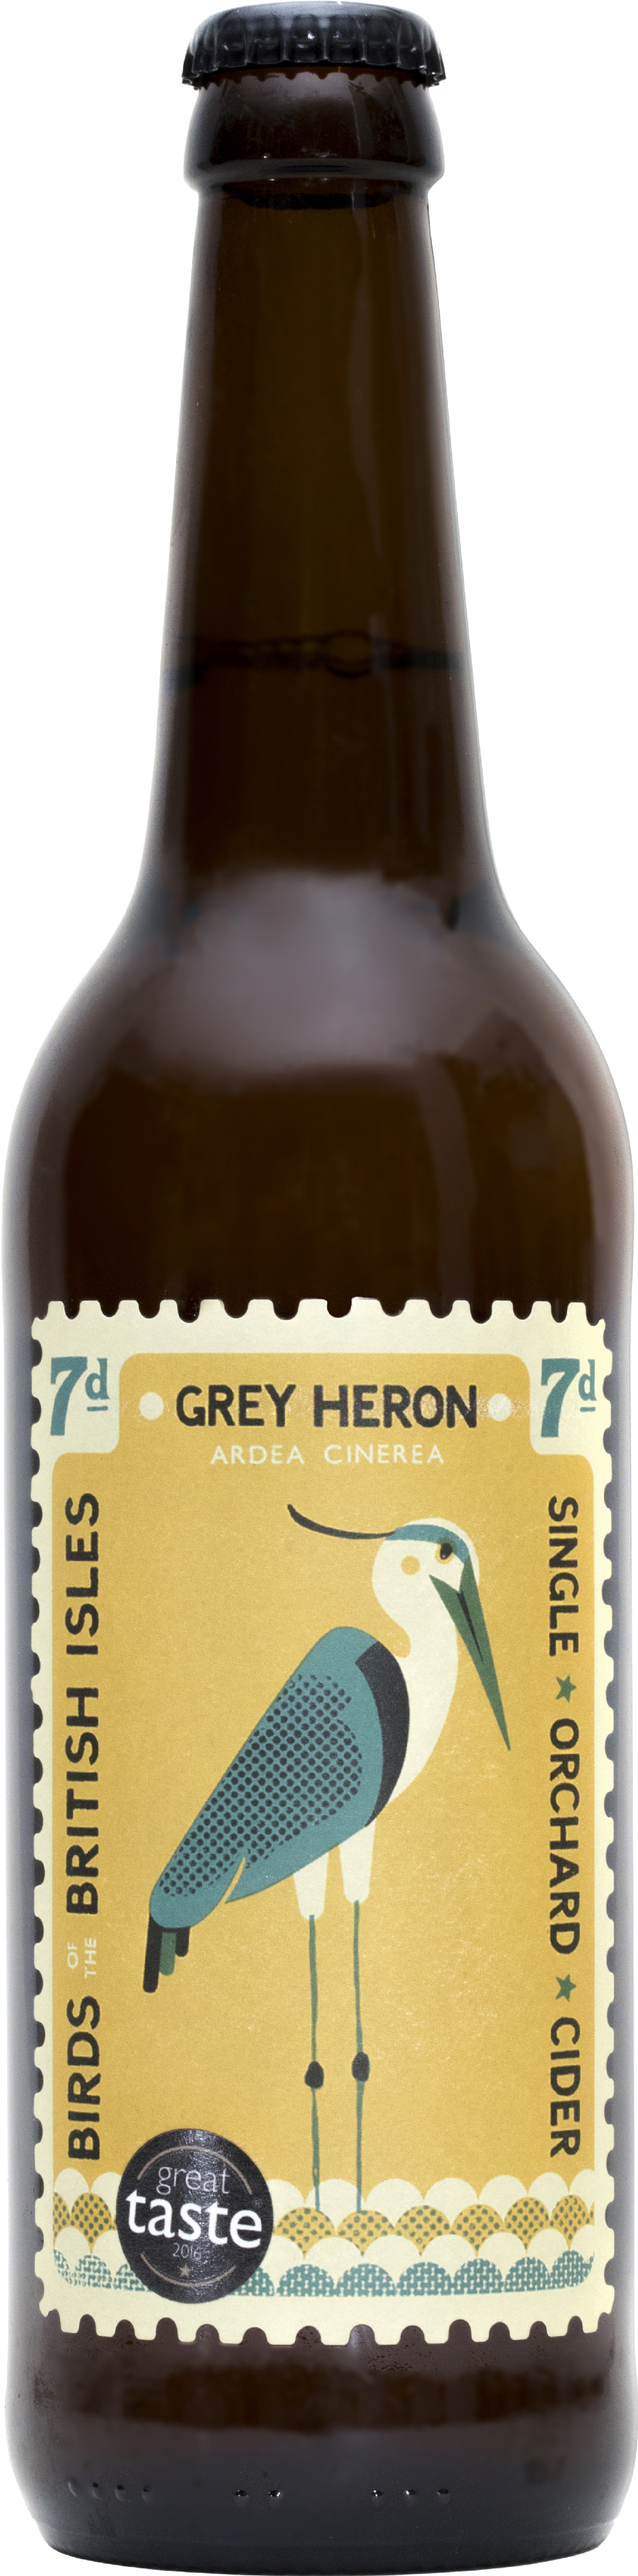 PERRY'S Farmhouse Cider - Grey Heron 500ml 5.5% ABV